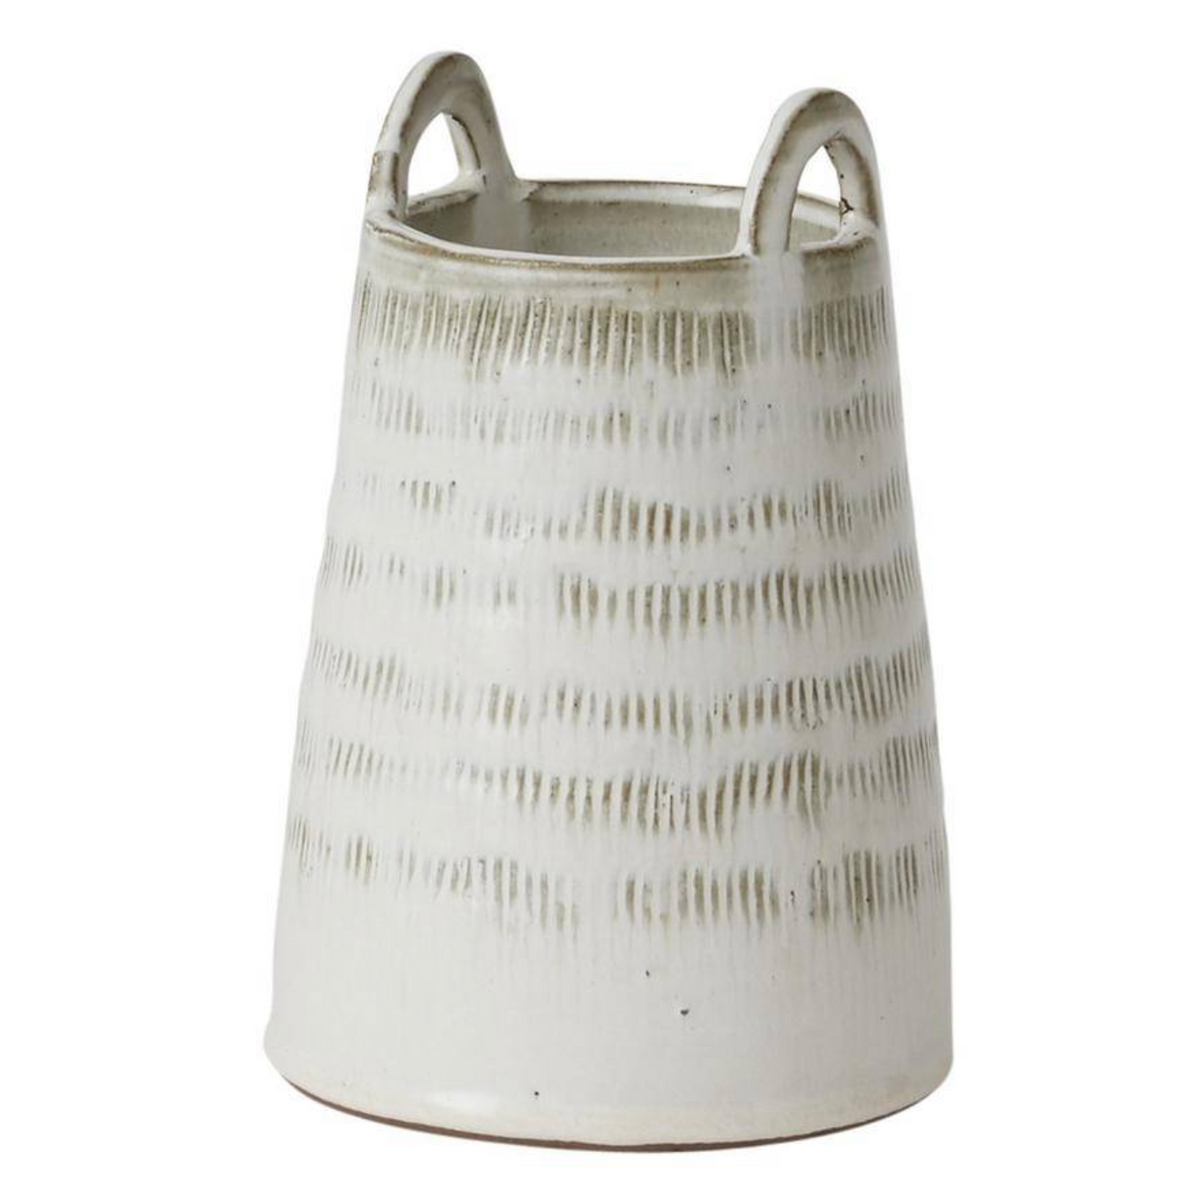 Mia Handled Ceramic Vase - Large - Holistic Habitat 